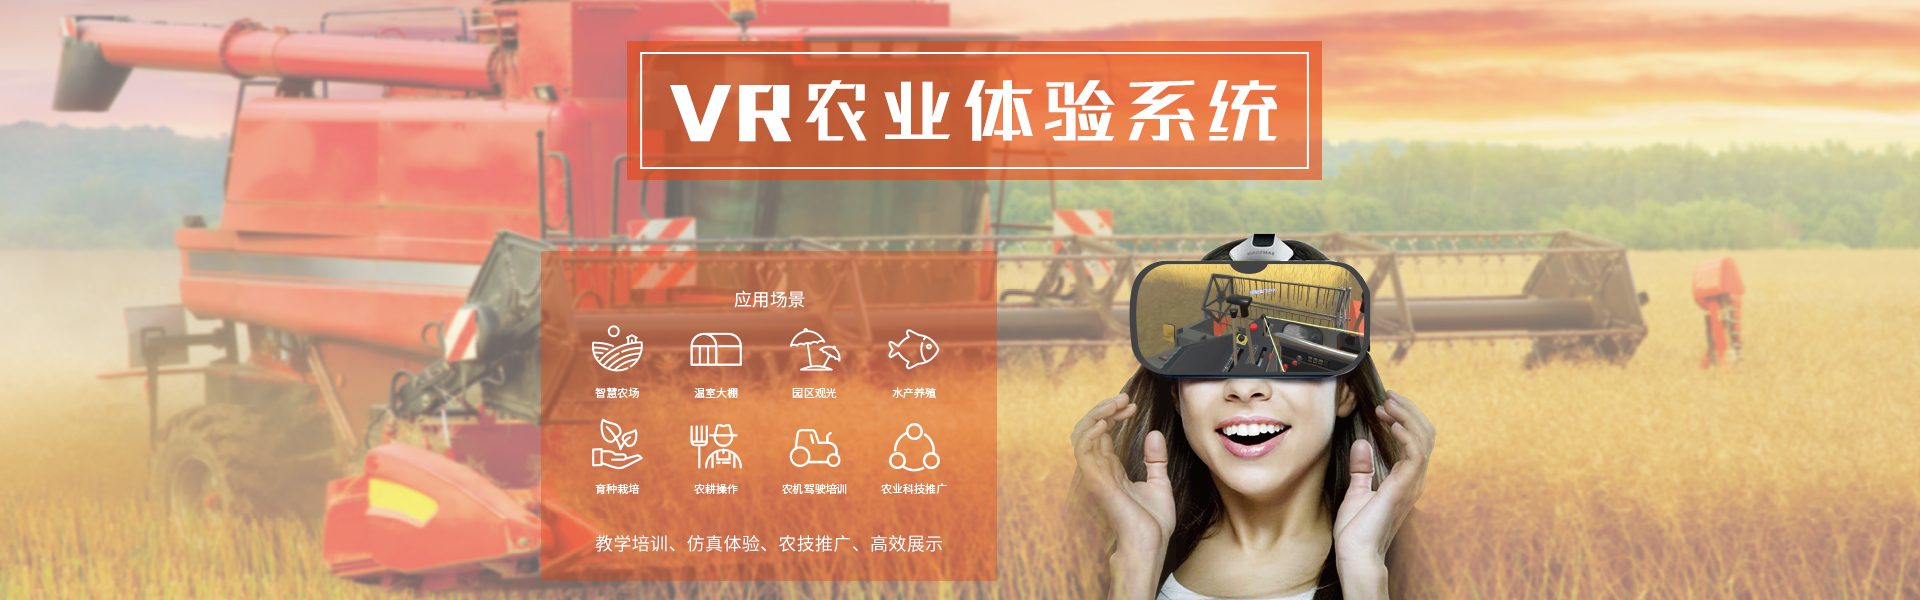 AR/VR新技术应用